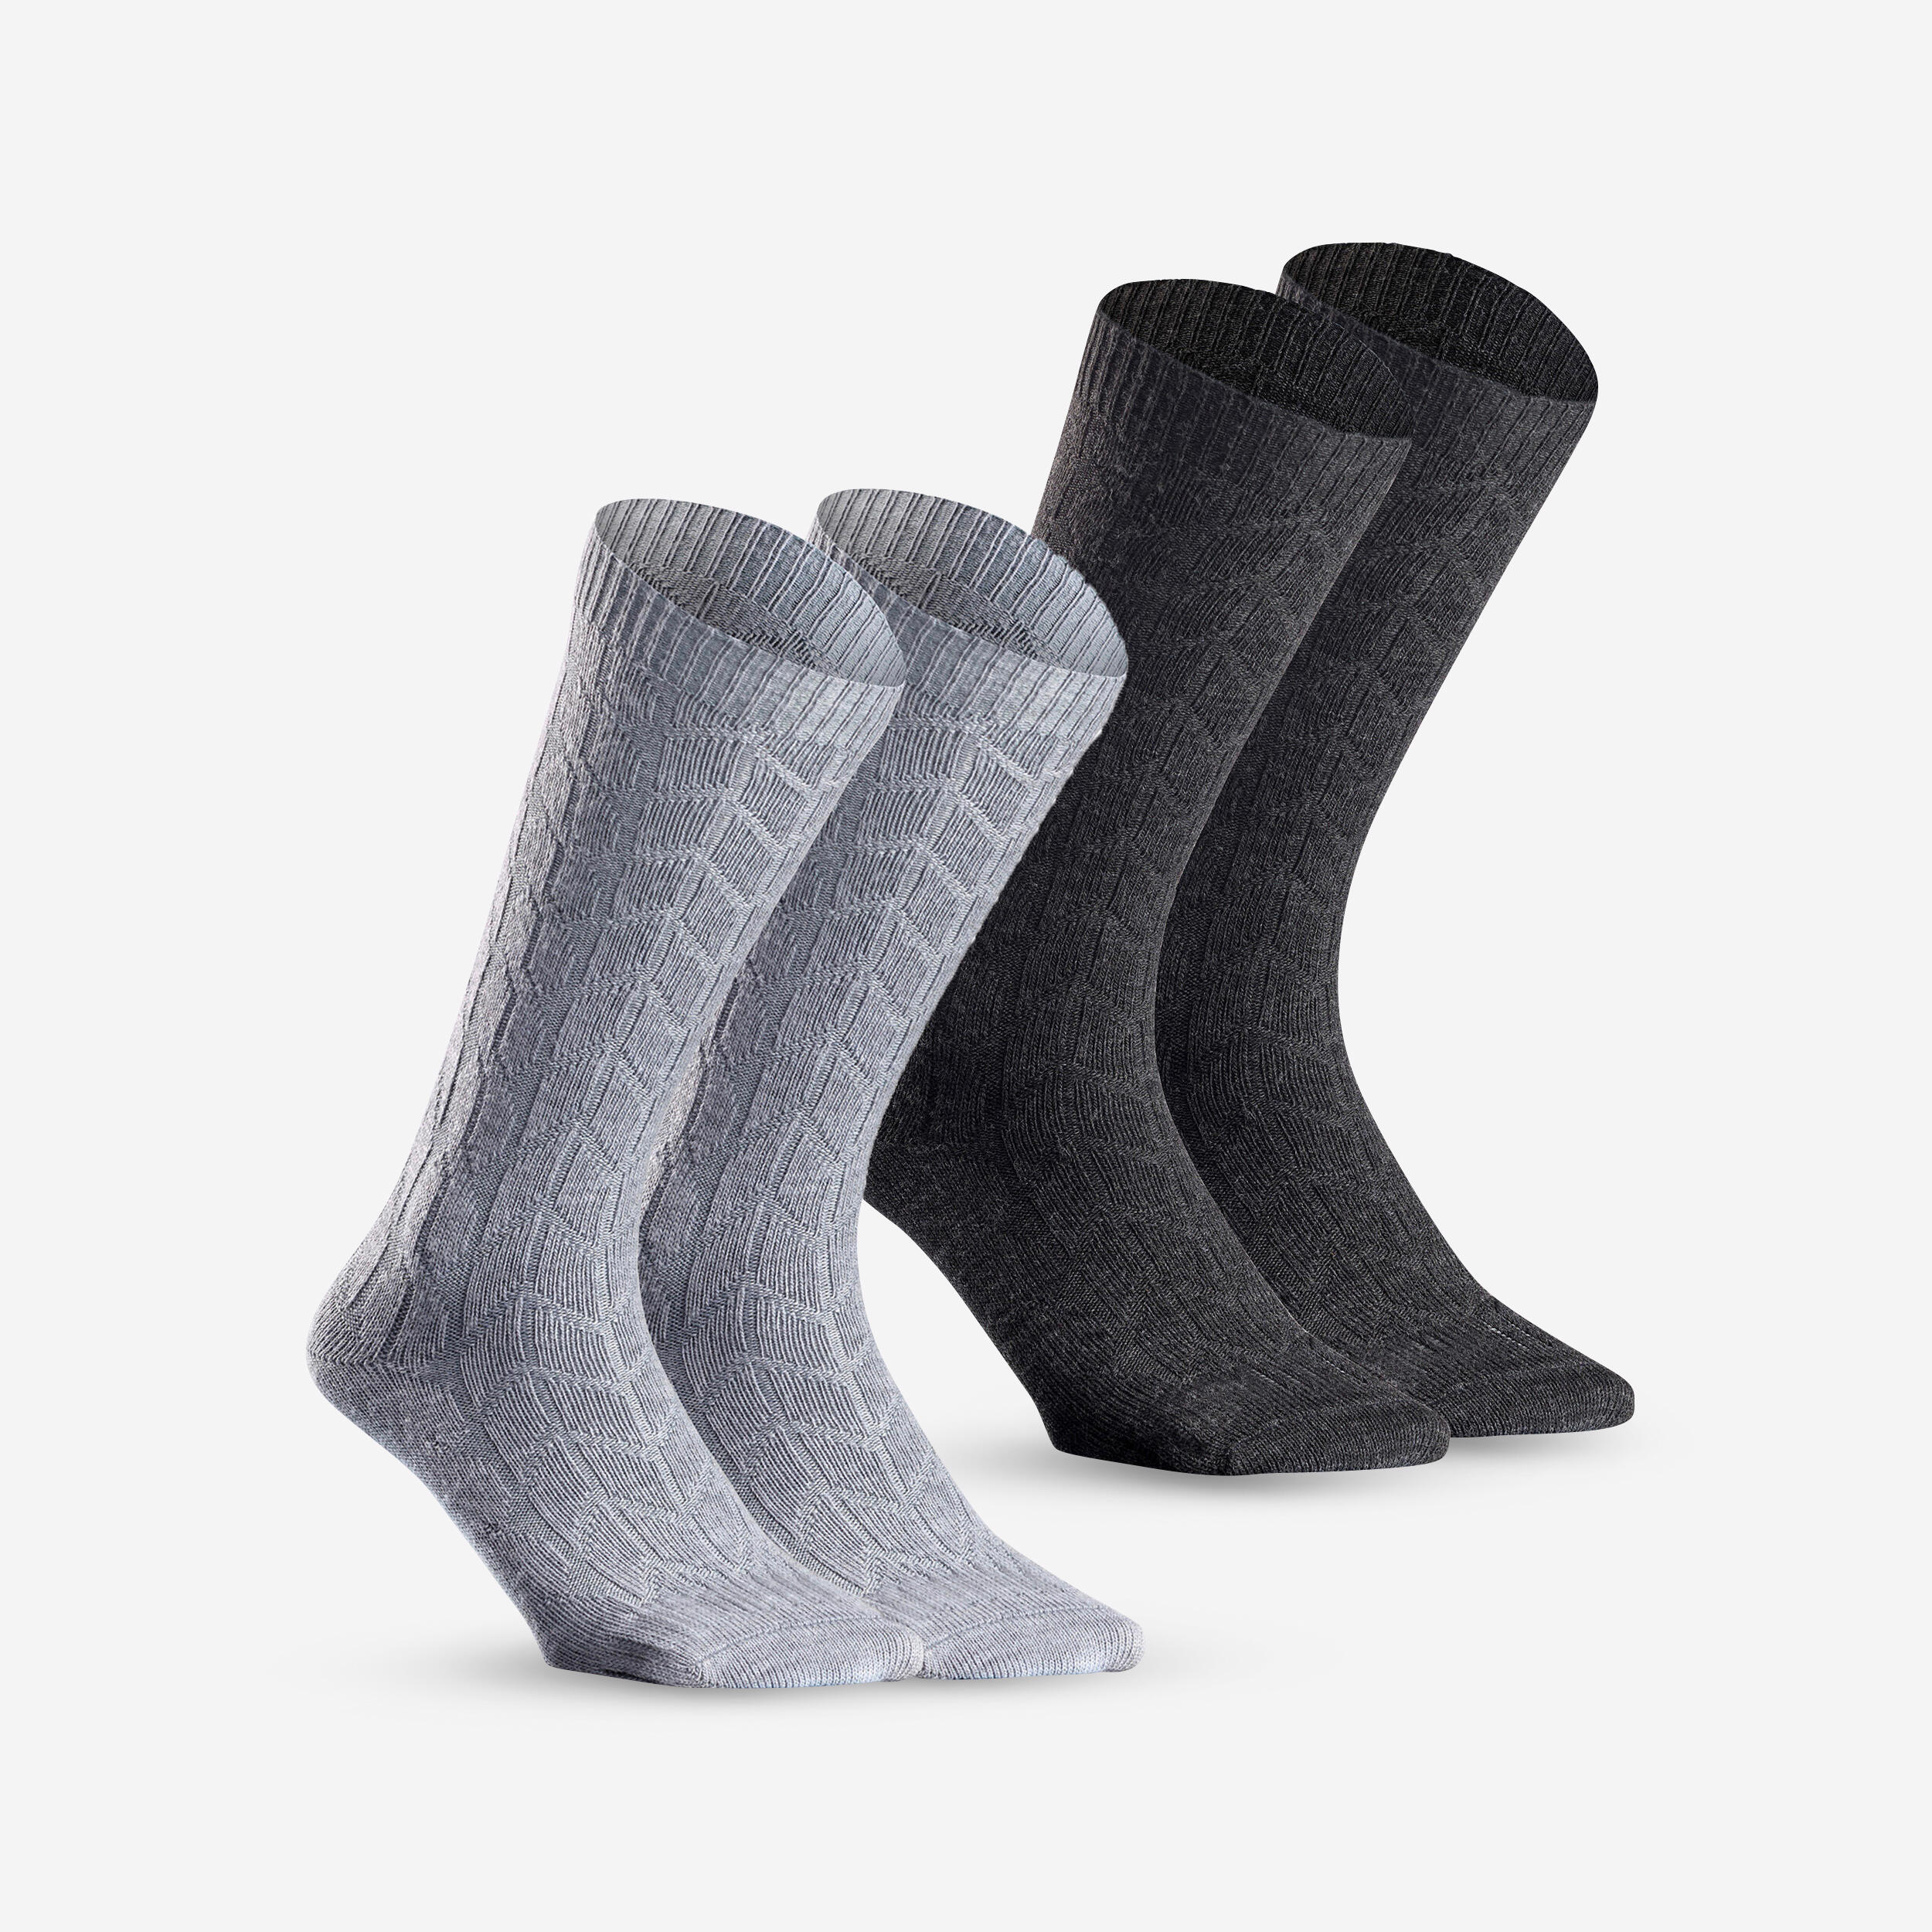 Warm hiking socks - SH100 MID JACQUARD - 2 pairs 1/10